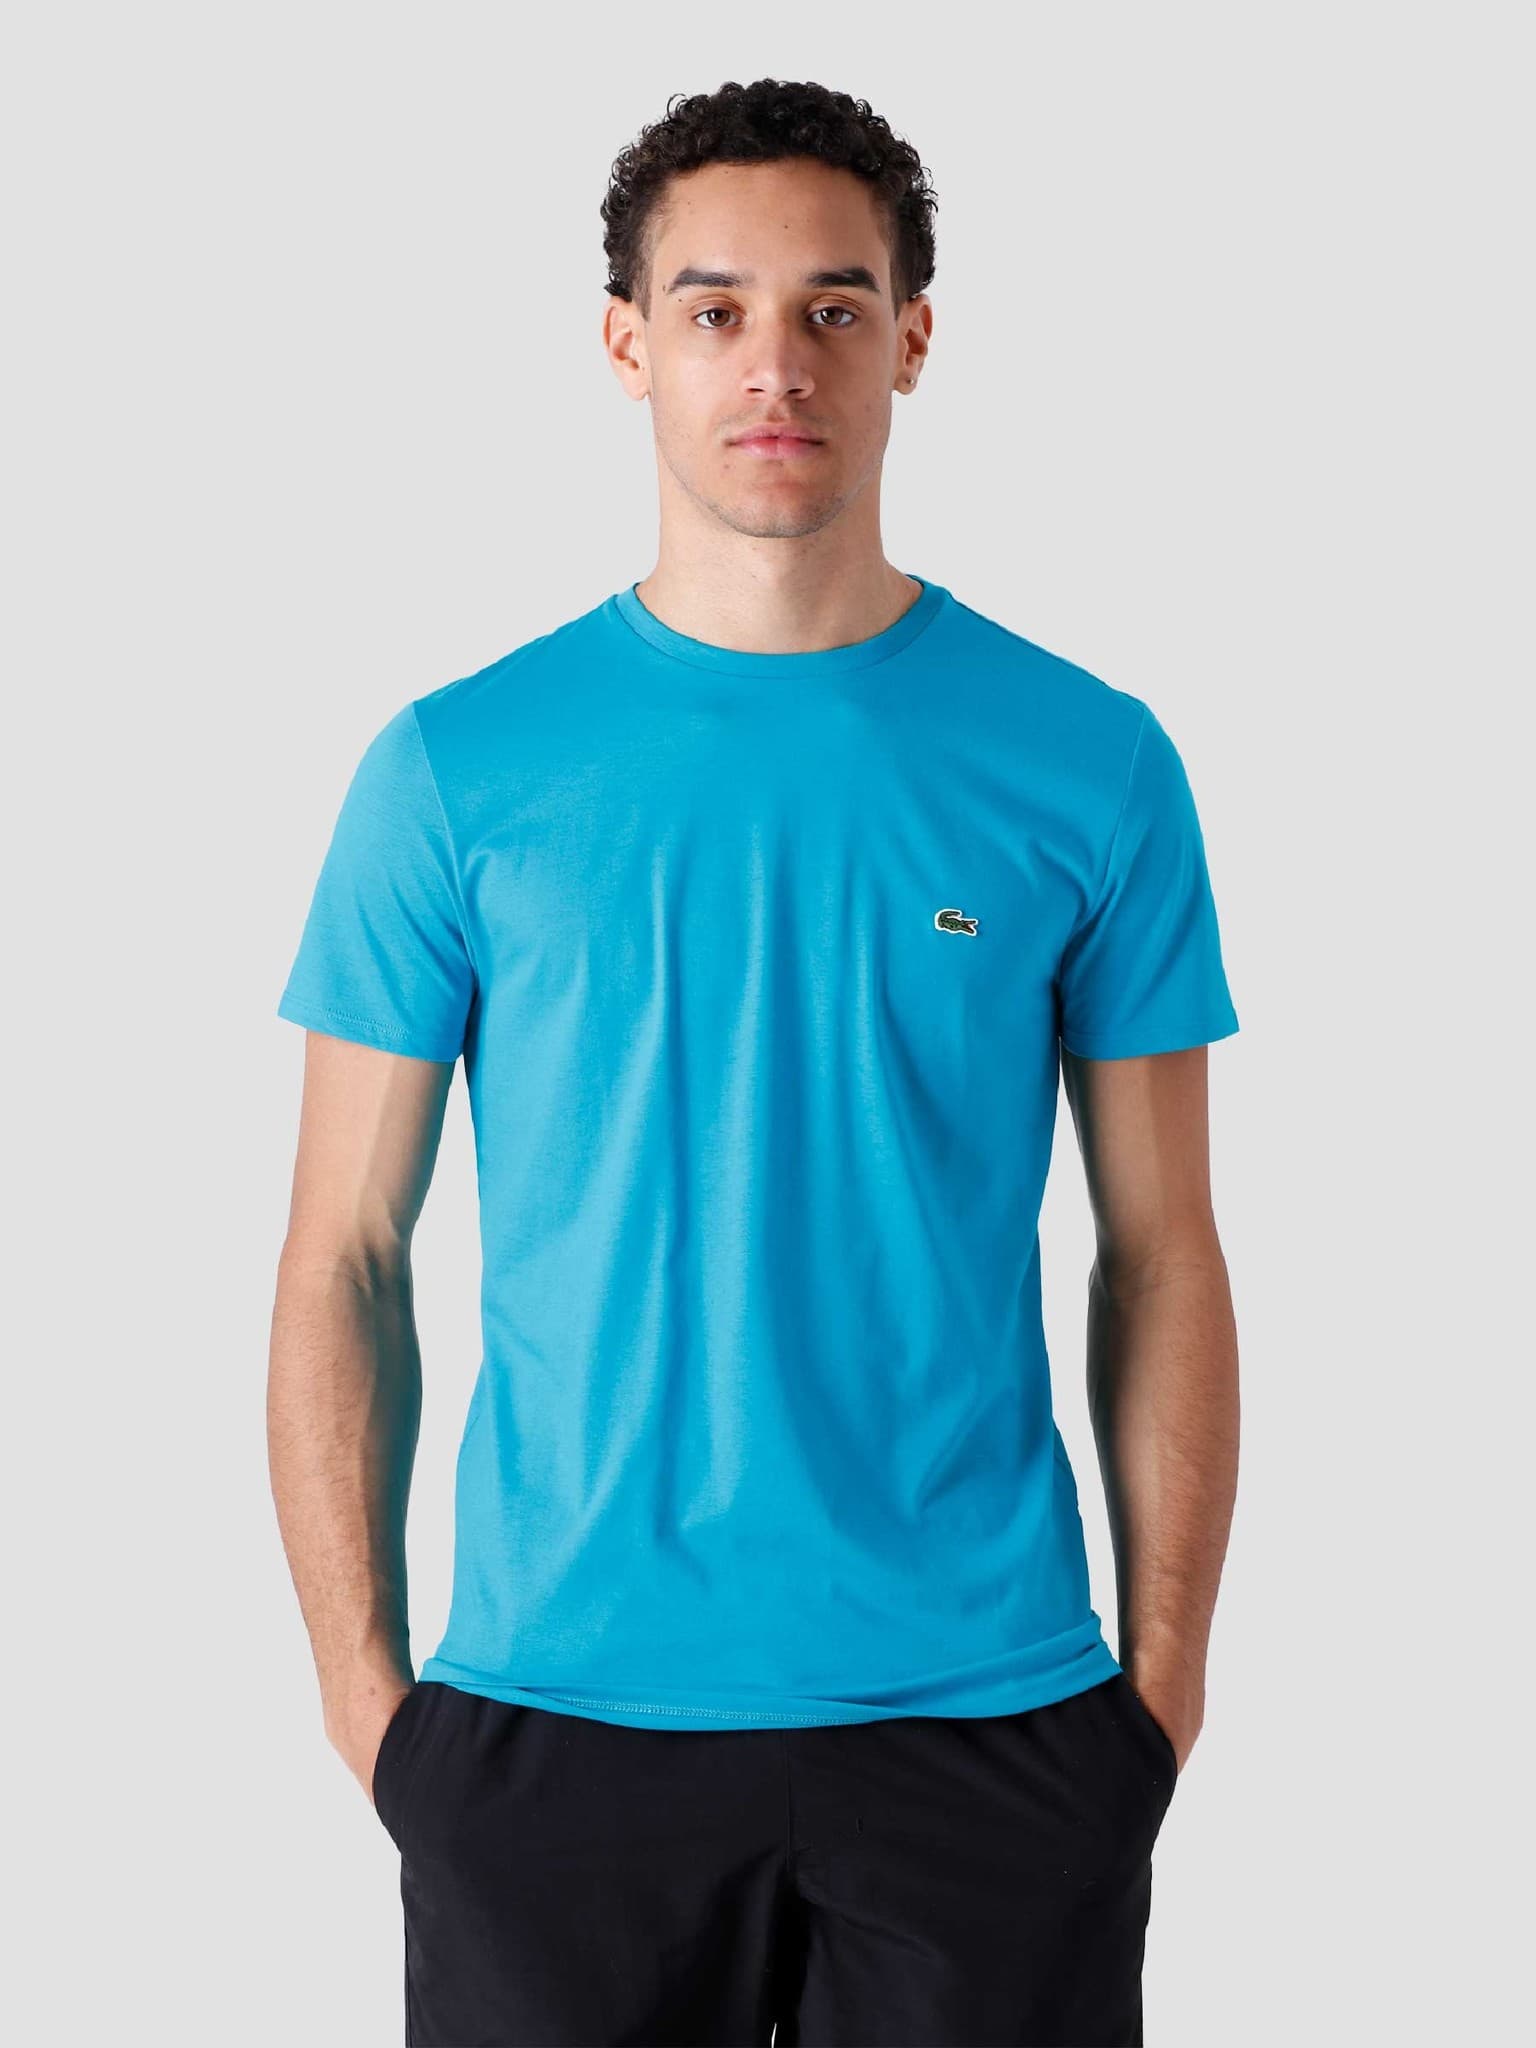 1HT1 Men's T-Shirt Reef TH6709-11